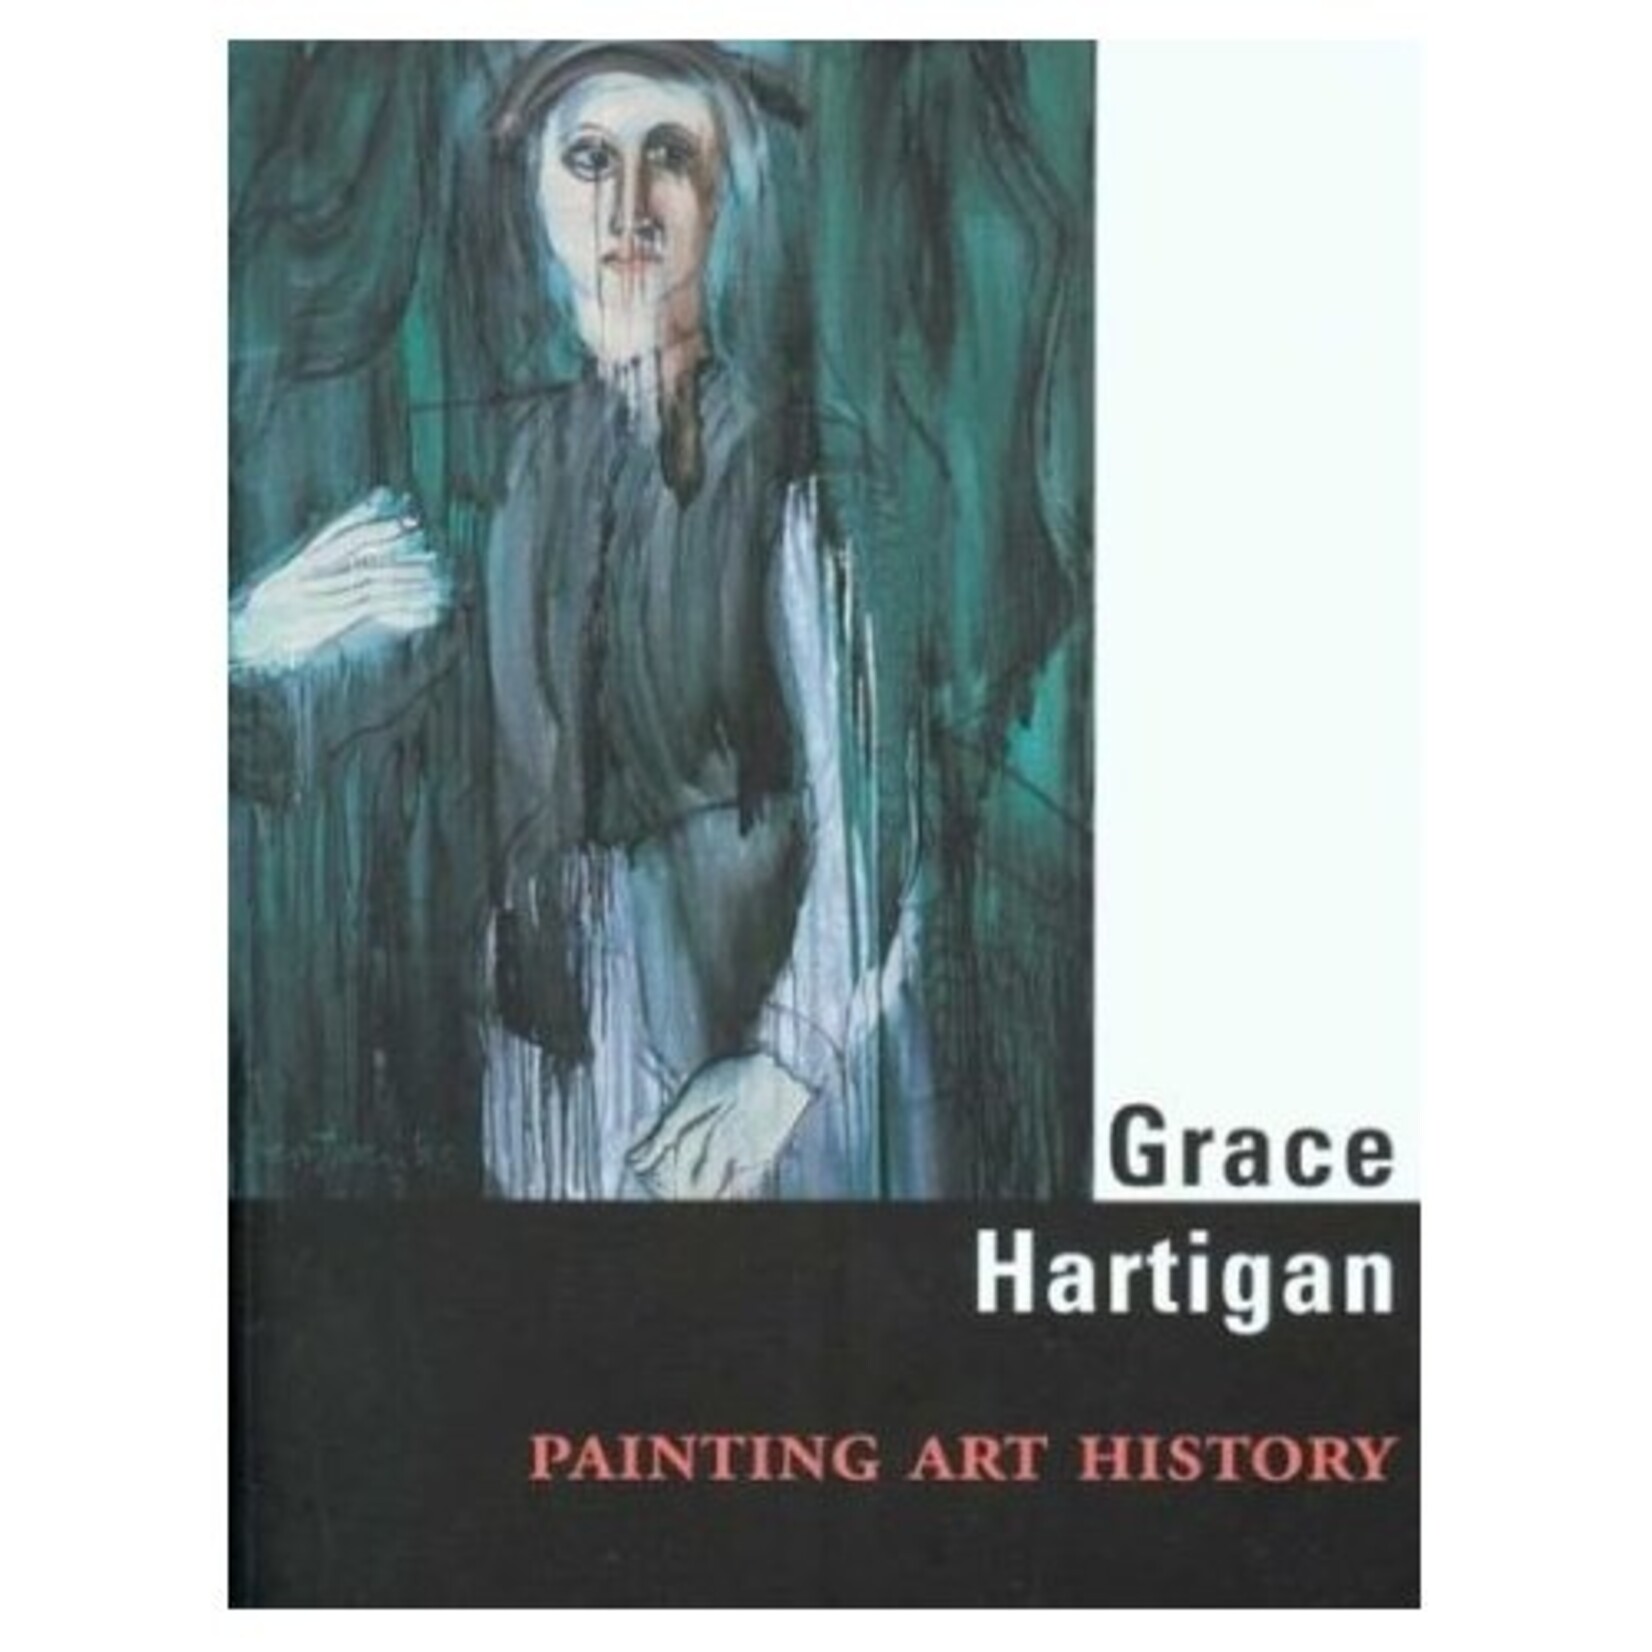 Painting Art History (Exhibition Catalog)